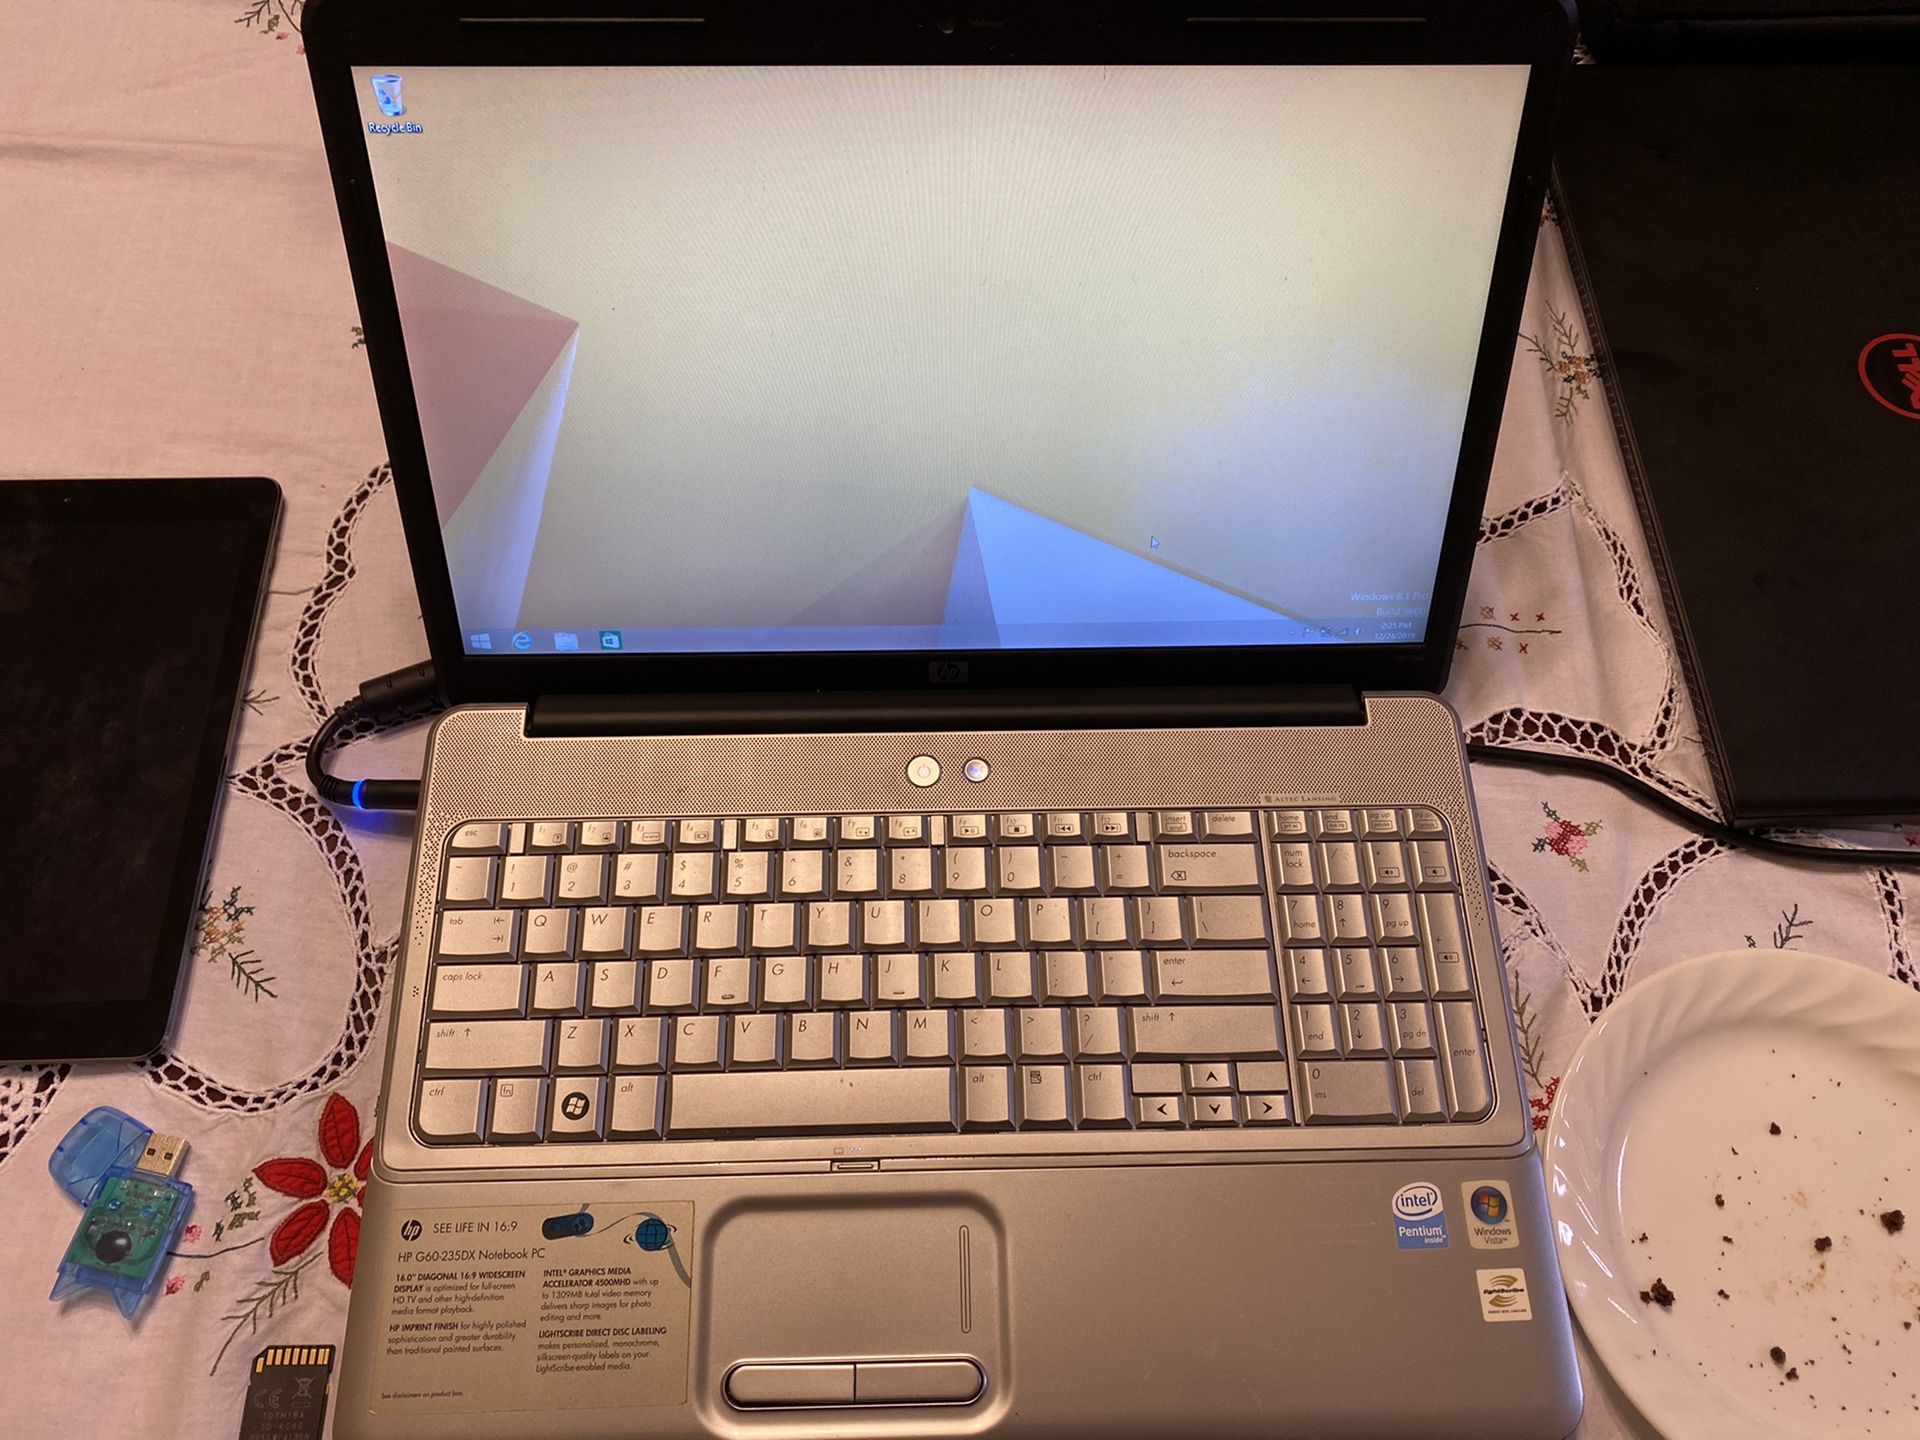 HP G60-235DX Notebook PC